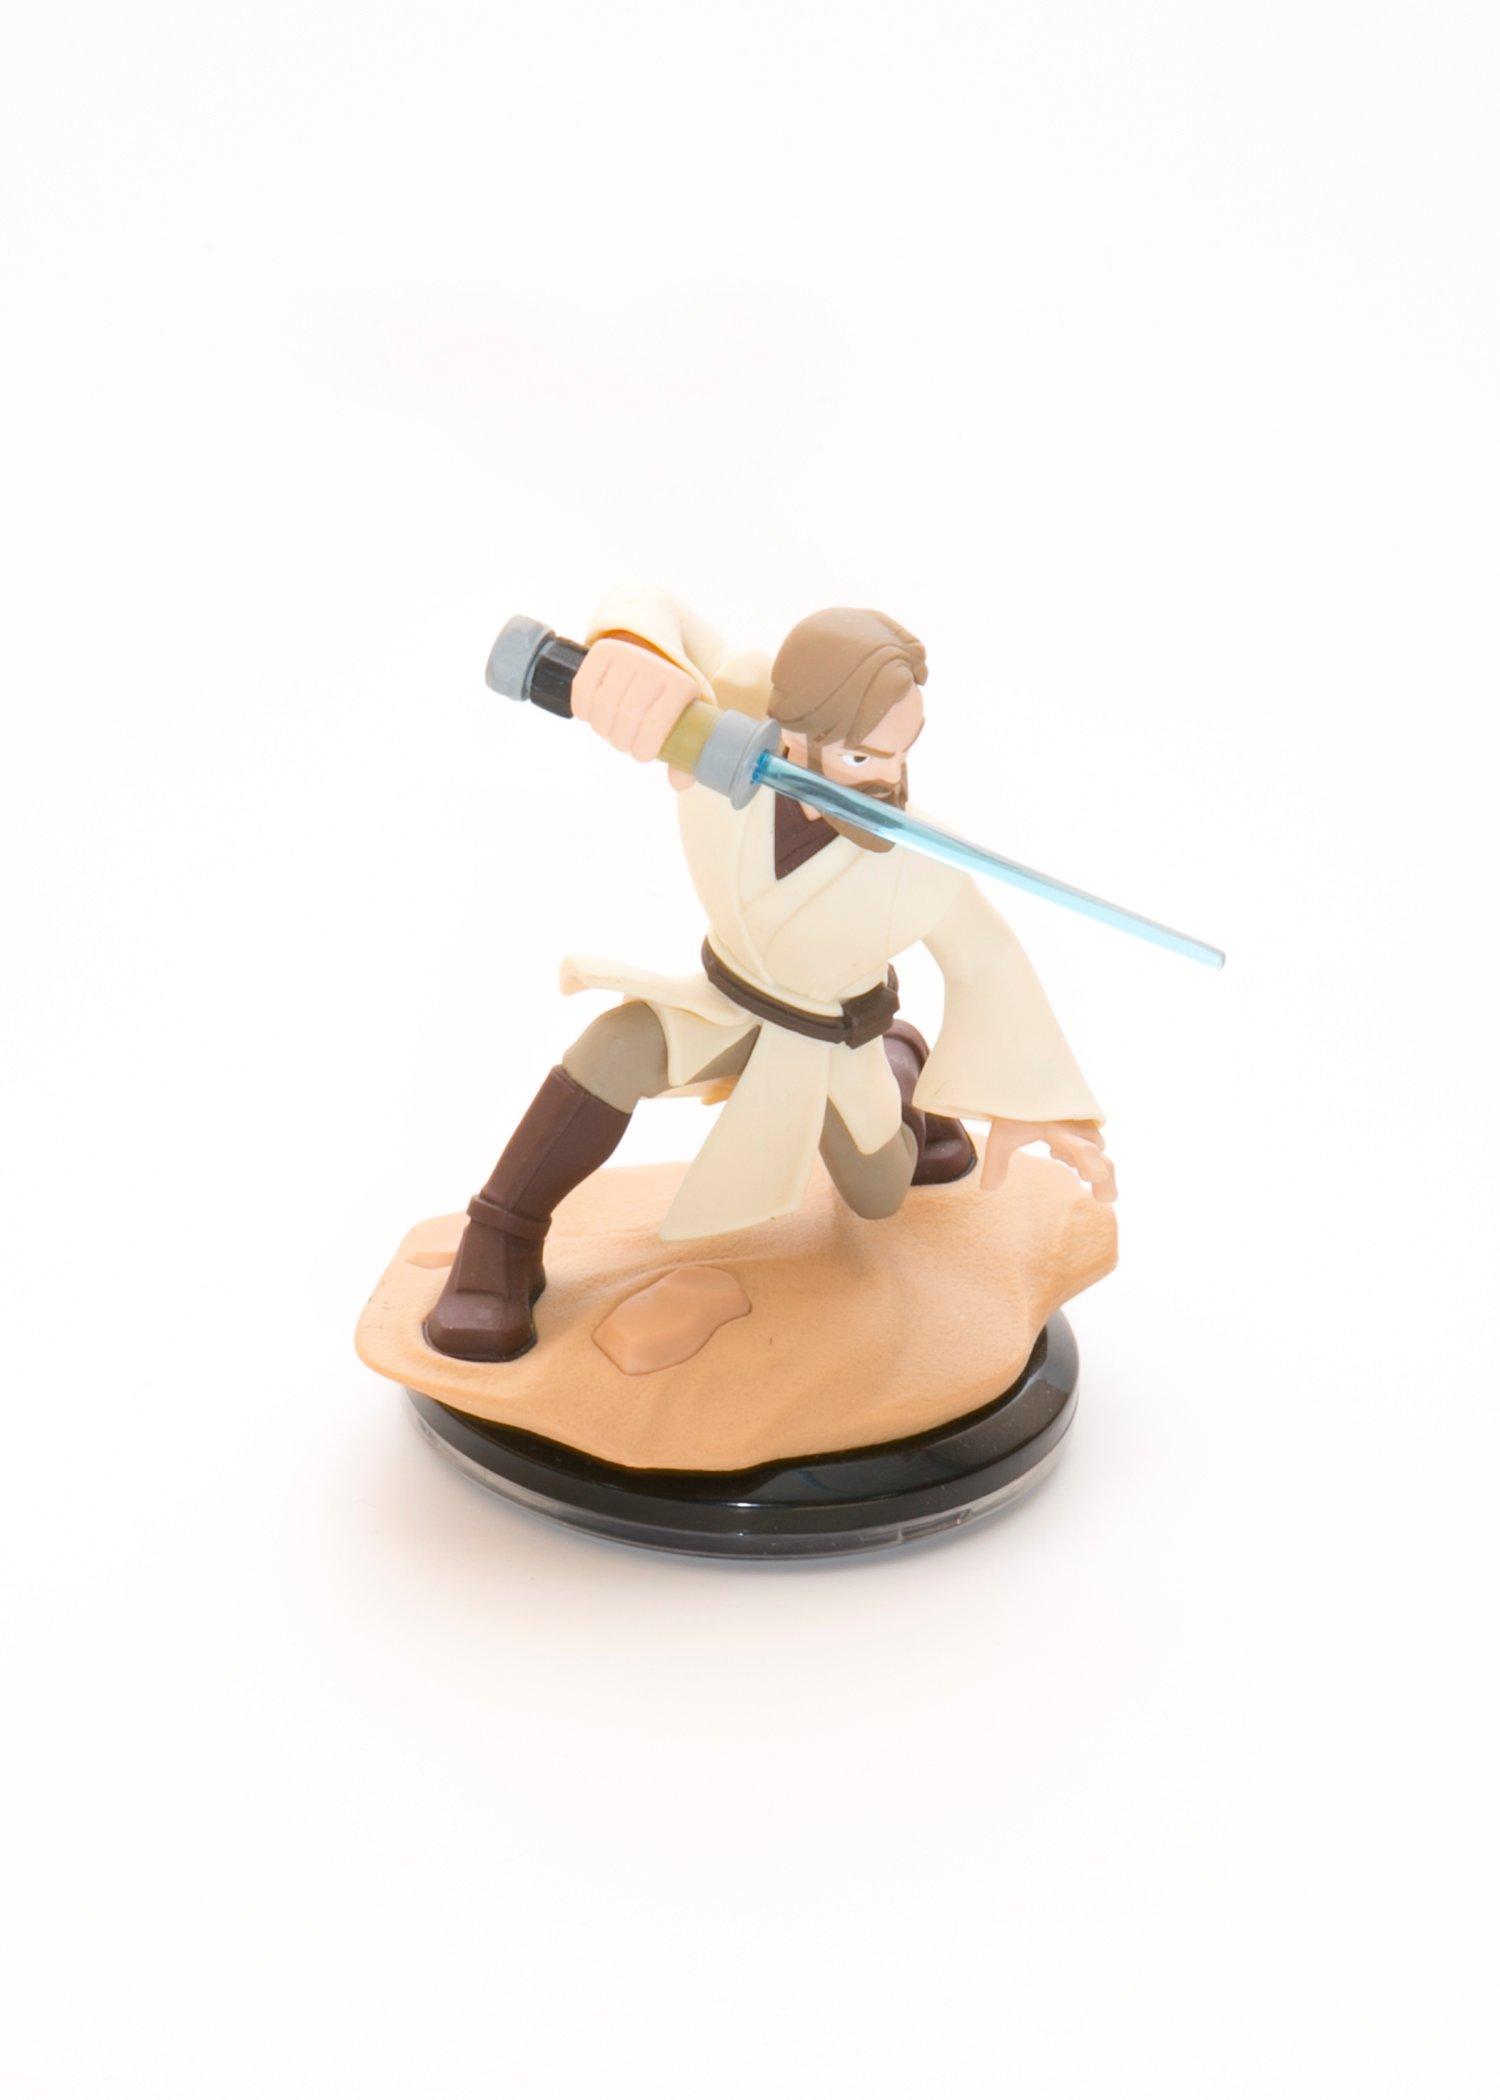 Disney INFINITY 3.0 Edition Star Wars Obi-Wan Kenobi Figure